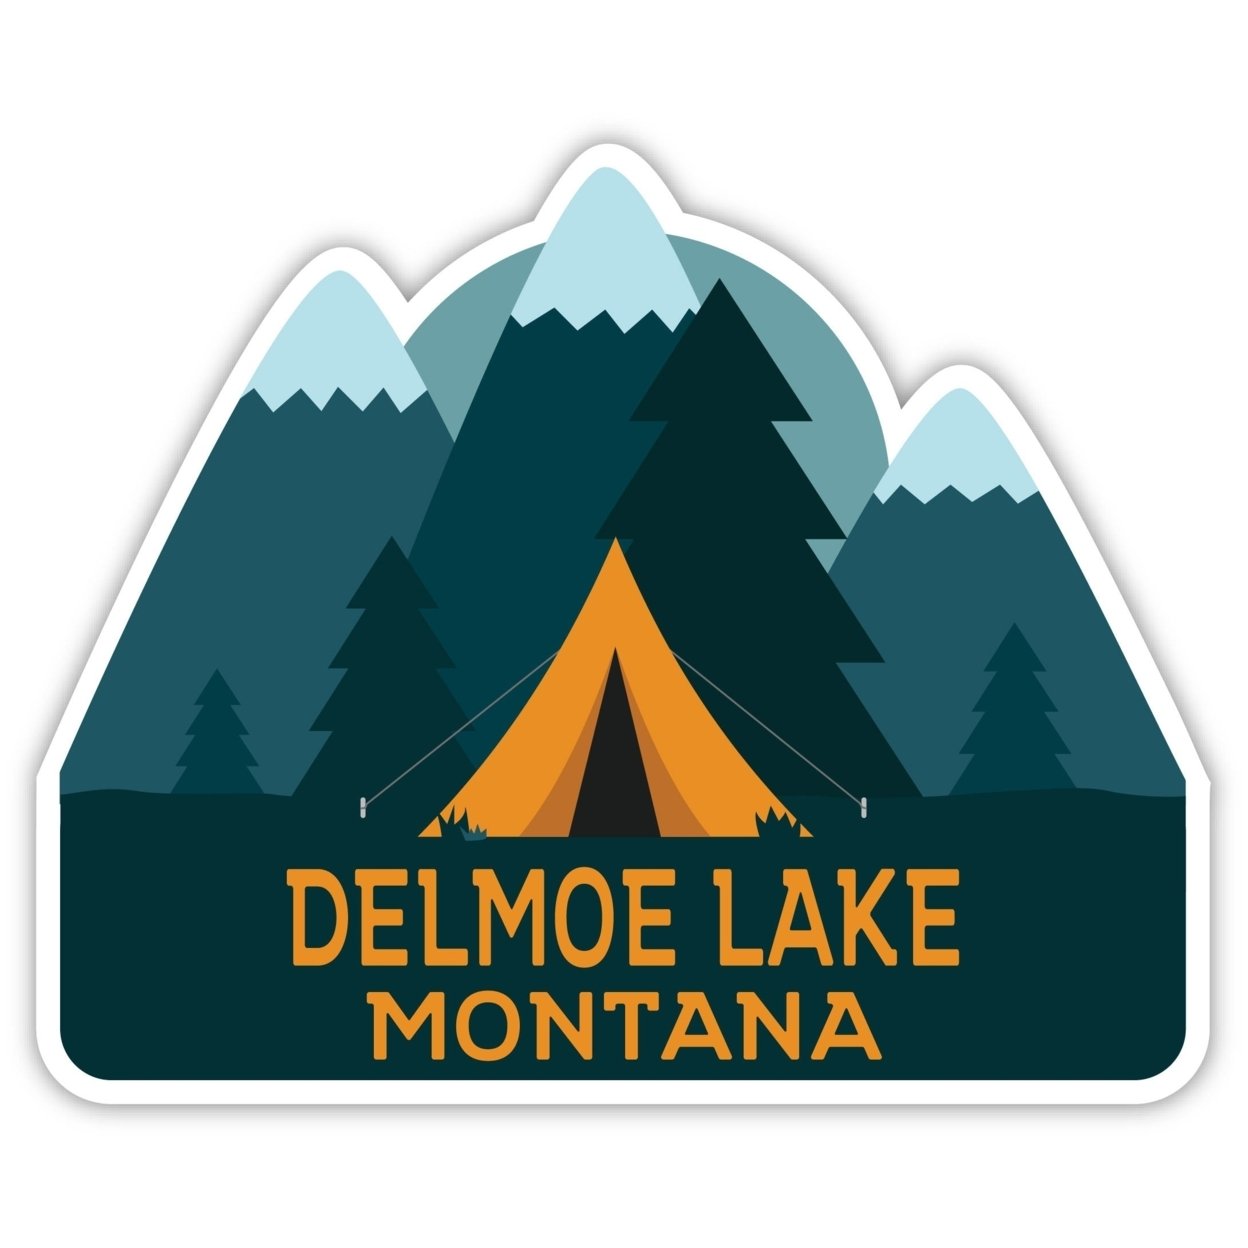 Delmoe Lake Montana Souvenir Decorative Stickers (Choose Theme And Size) - 4-Pack, 10-Inch, Tent